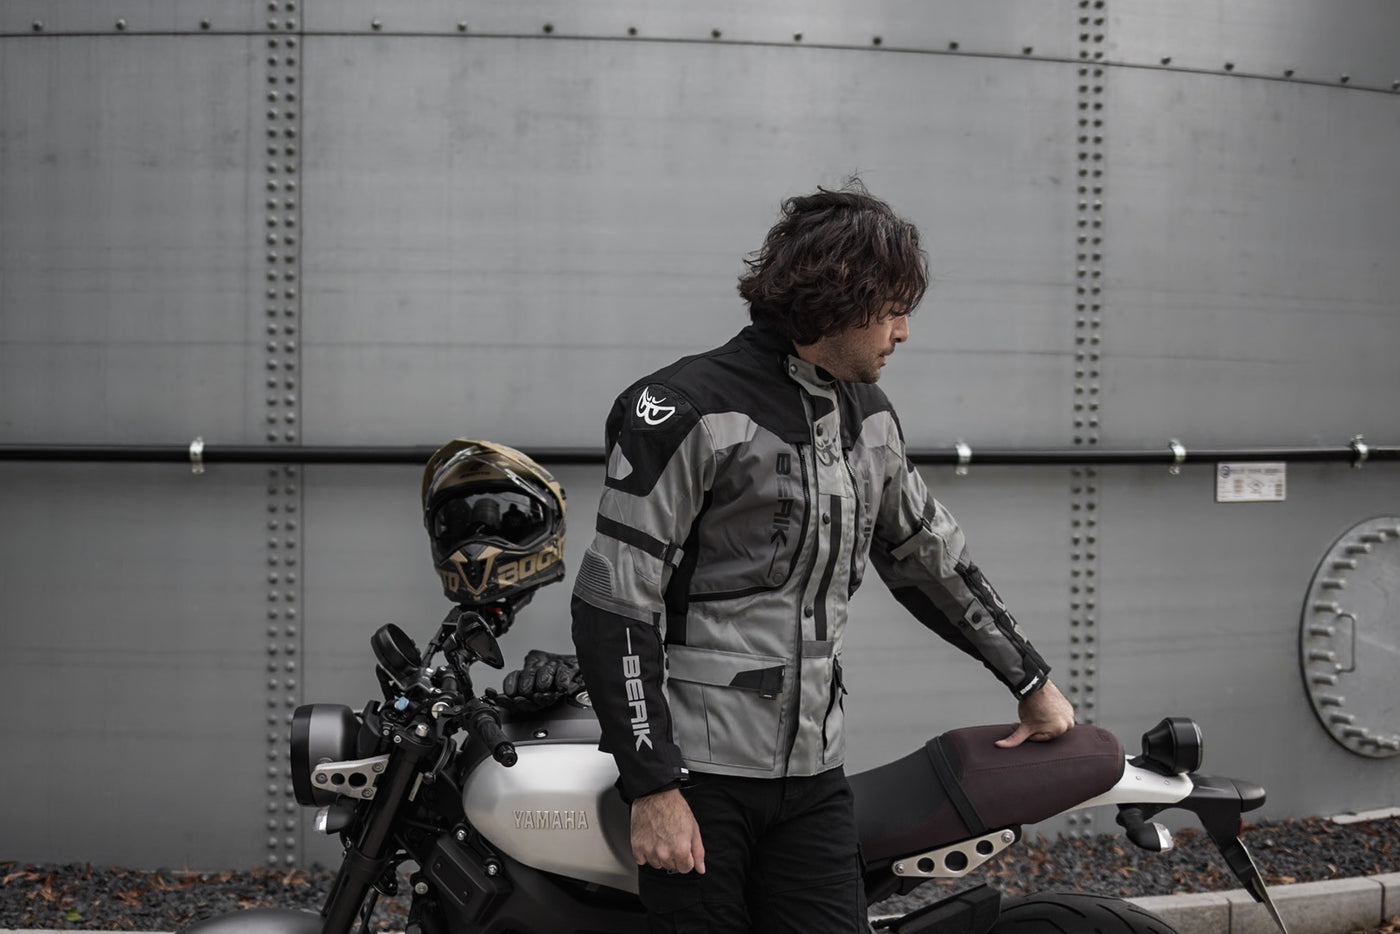 Berik Dakota Waterproof 3in1 Motorcycle Textile Jacket#color_black-anthracite-grey